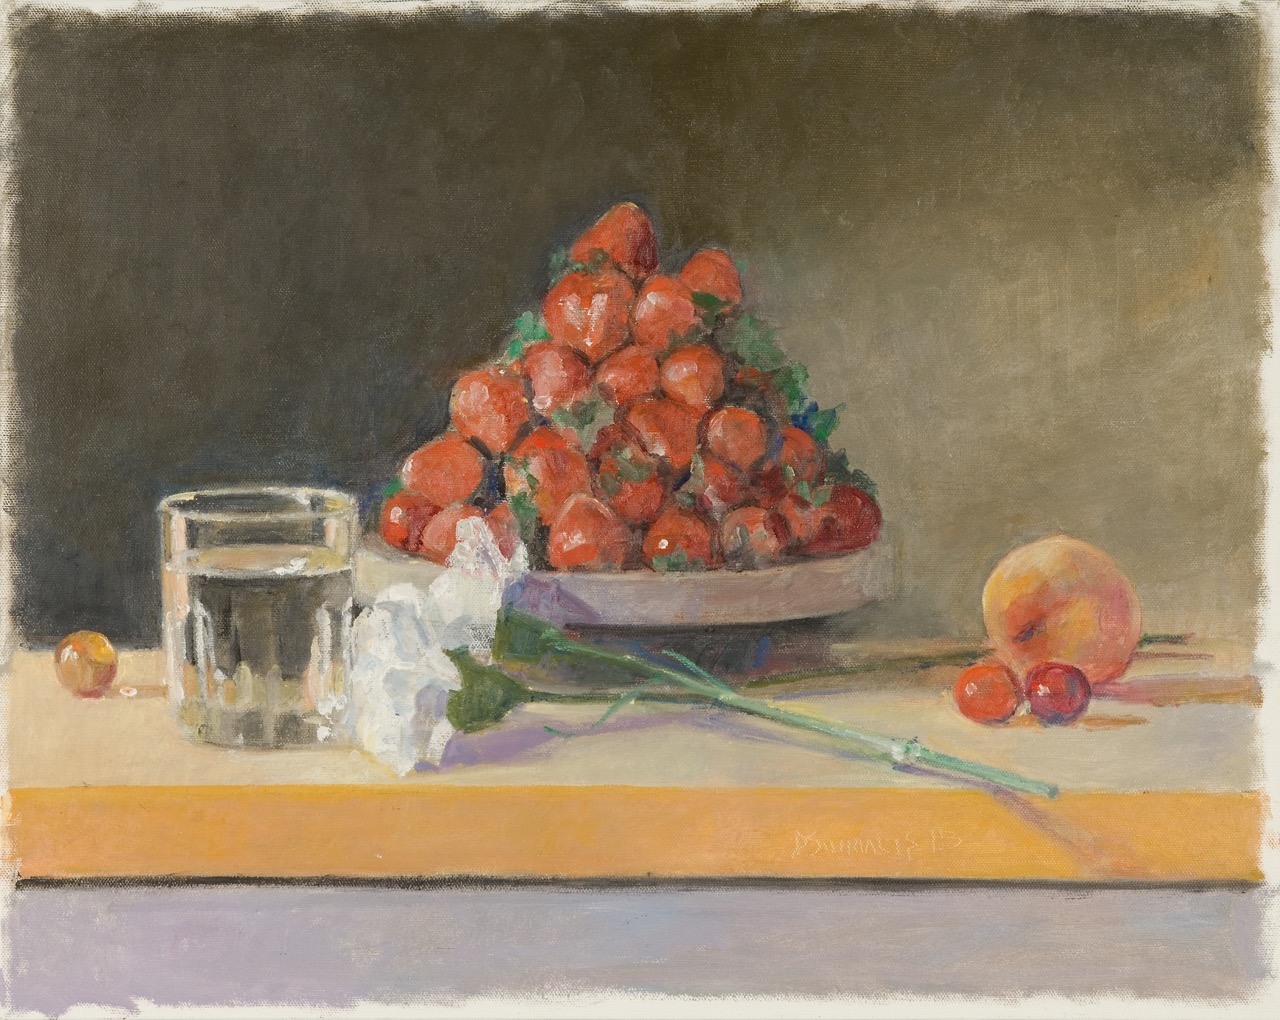 Modern Strawberries for J.B.S. Chardin 
at Les Yeux du Monde Art Gallery